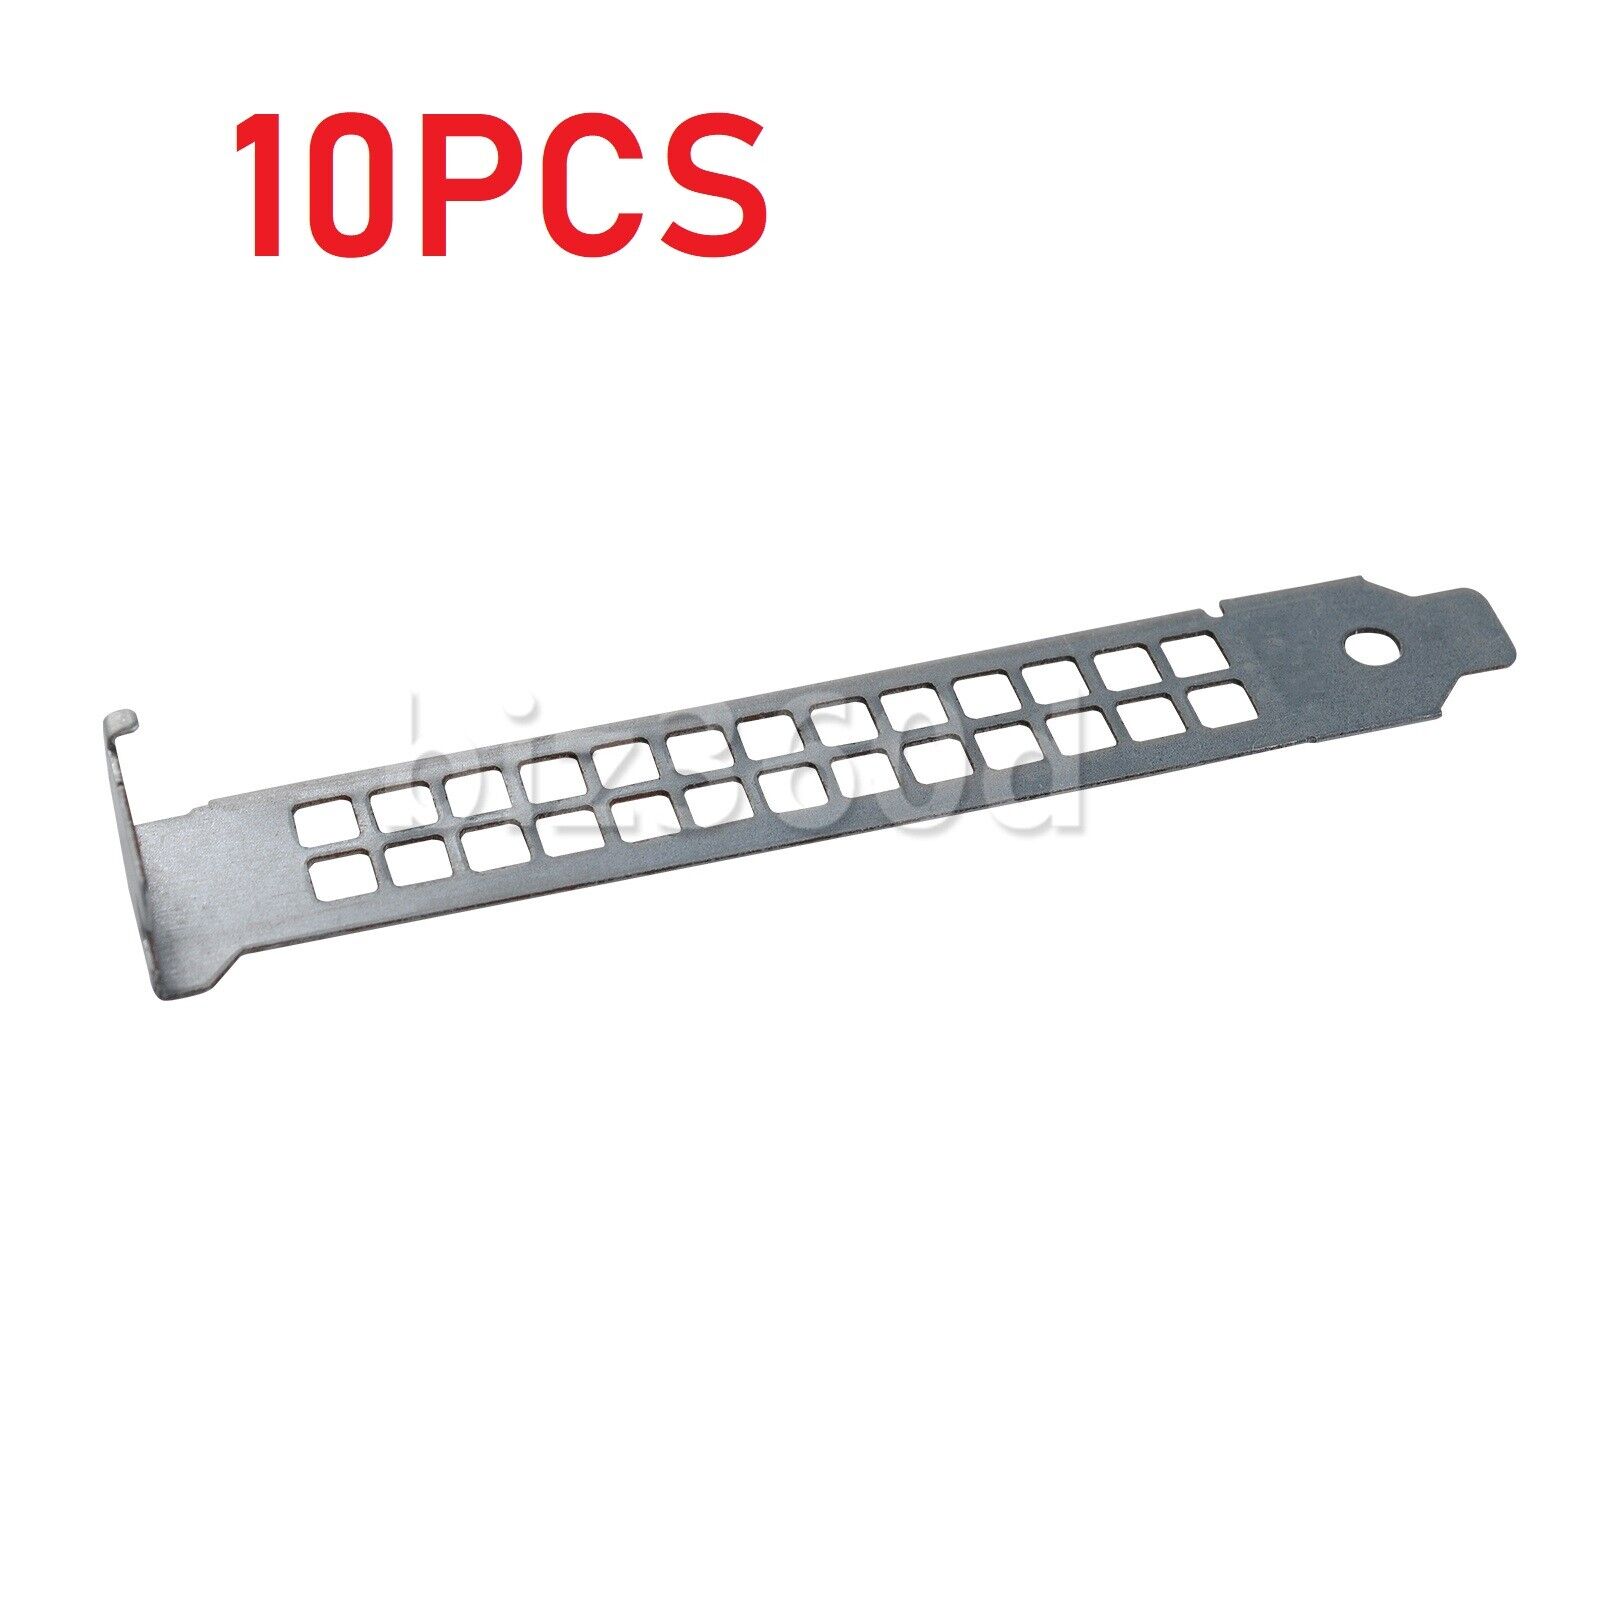 Lot of 10 For Dell Optiplex Full Height PCI Blank Slot Cover 7010 960 7020 9020